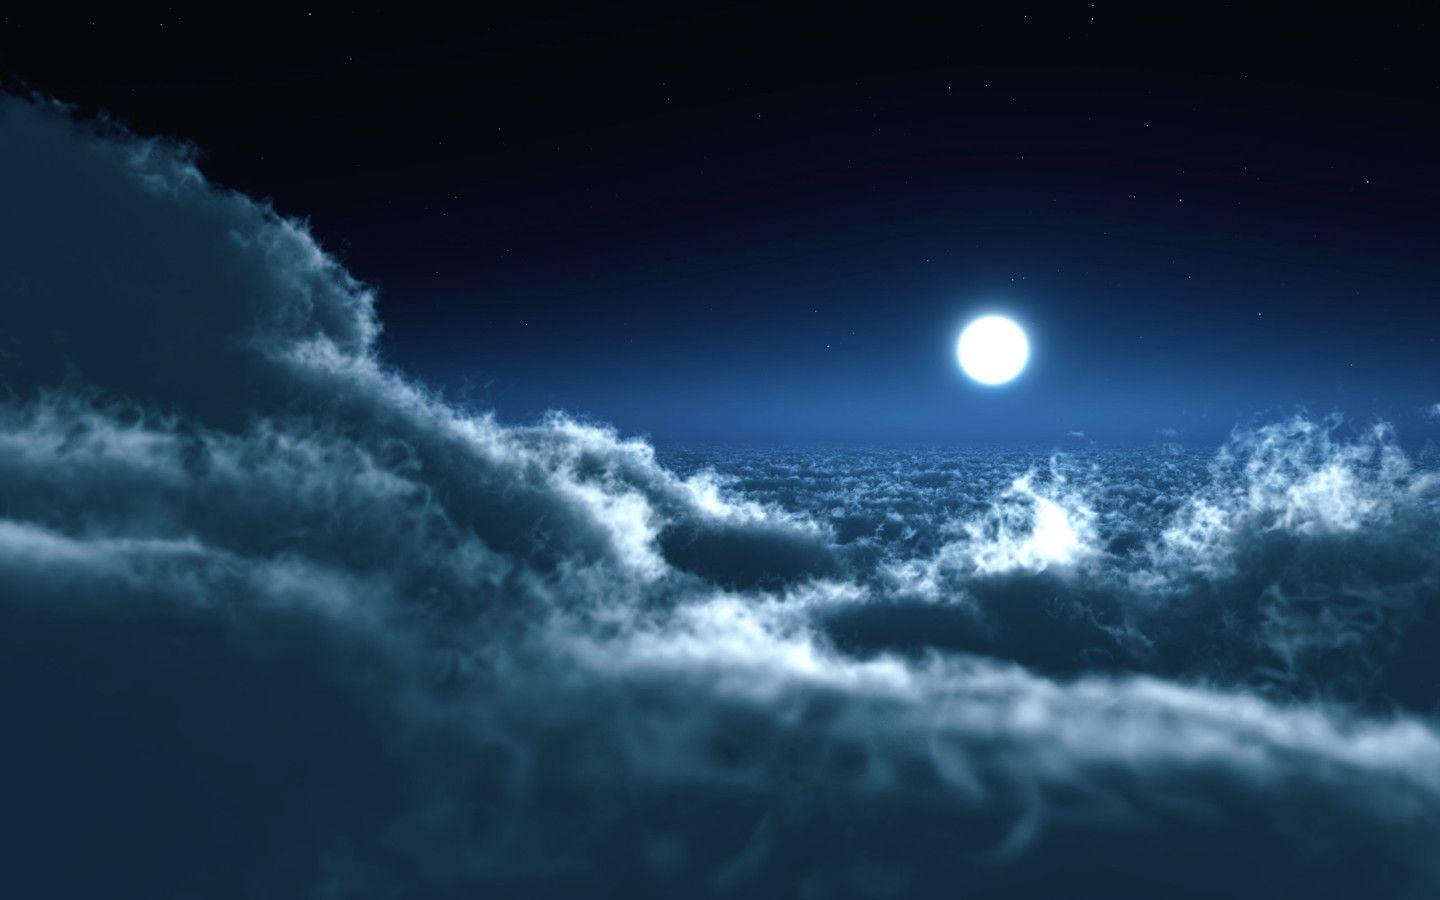 Night Sky Wallpaper 11300 1440x900 px